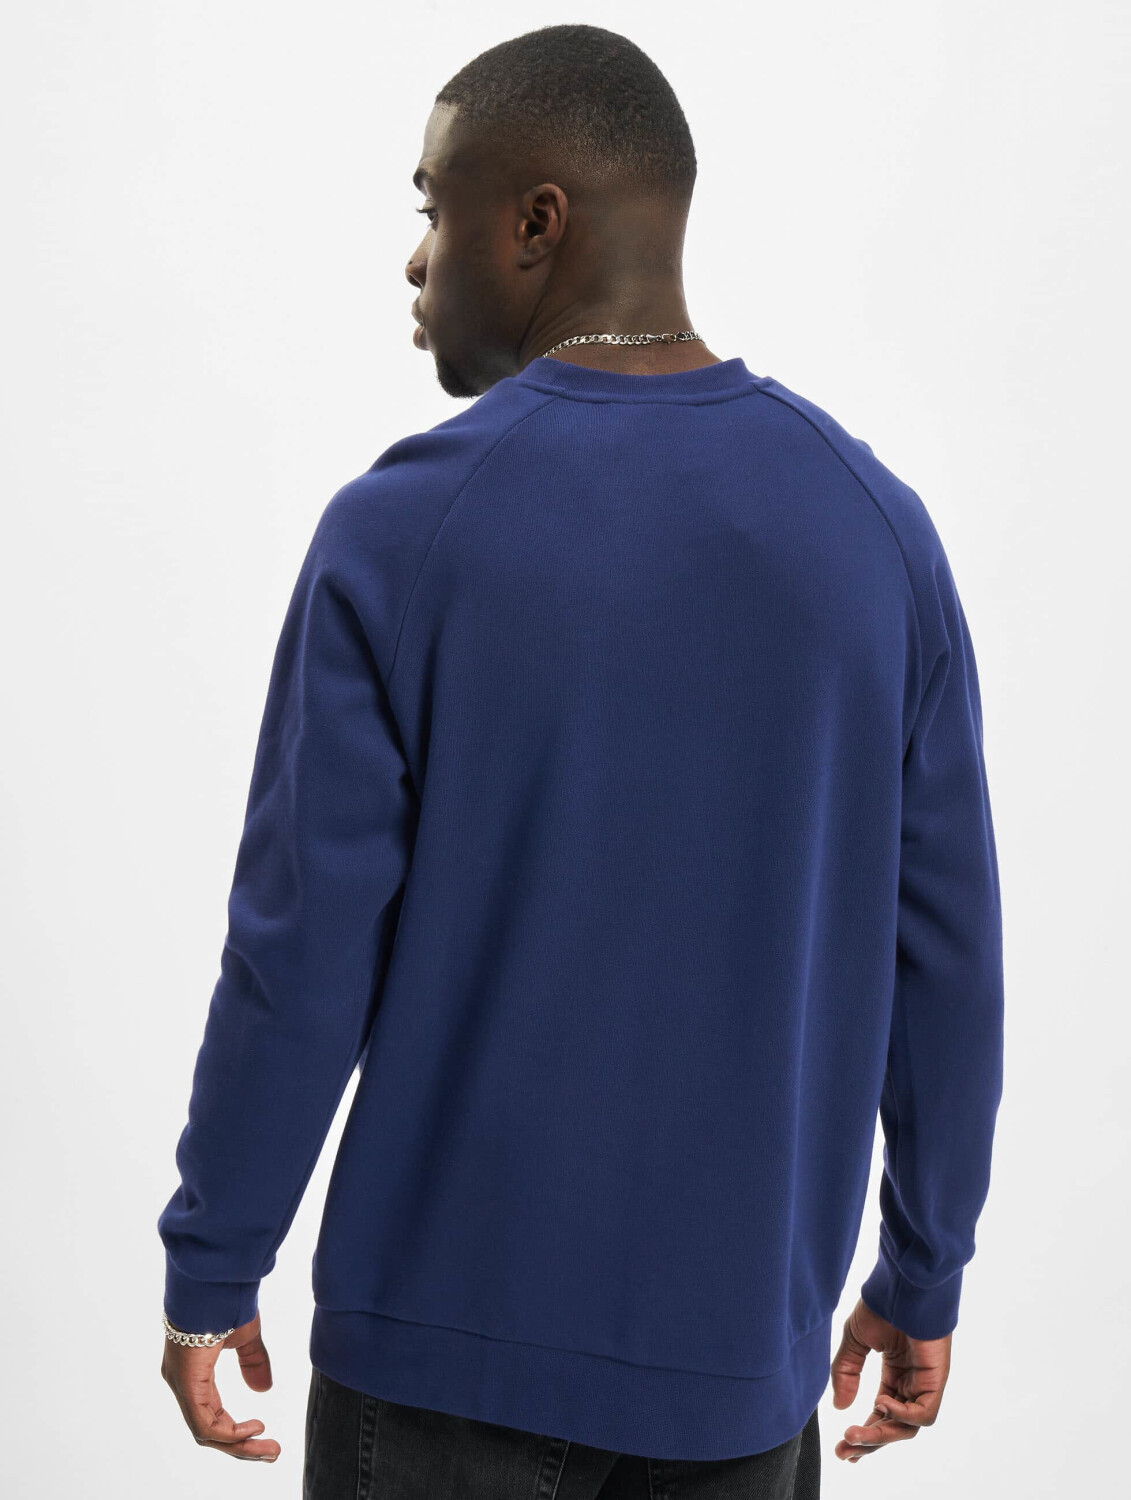 (H06654) adicolor Sweatshirt dark from £22.99 – blue on Deals (Today) Best Classics Adidas Trefoil Buy